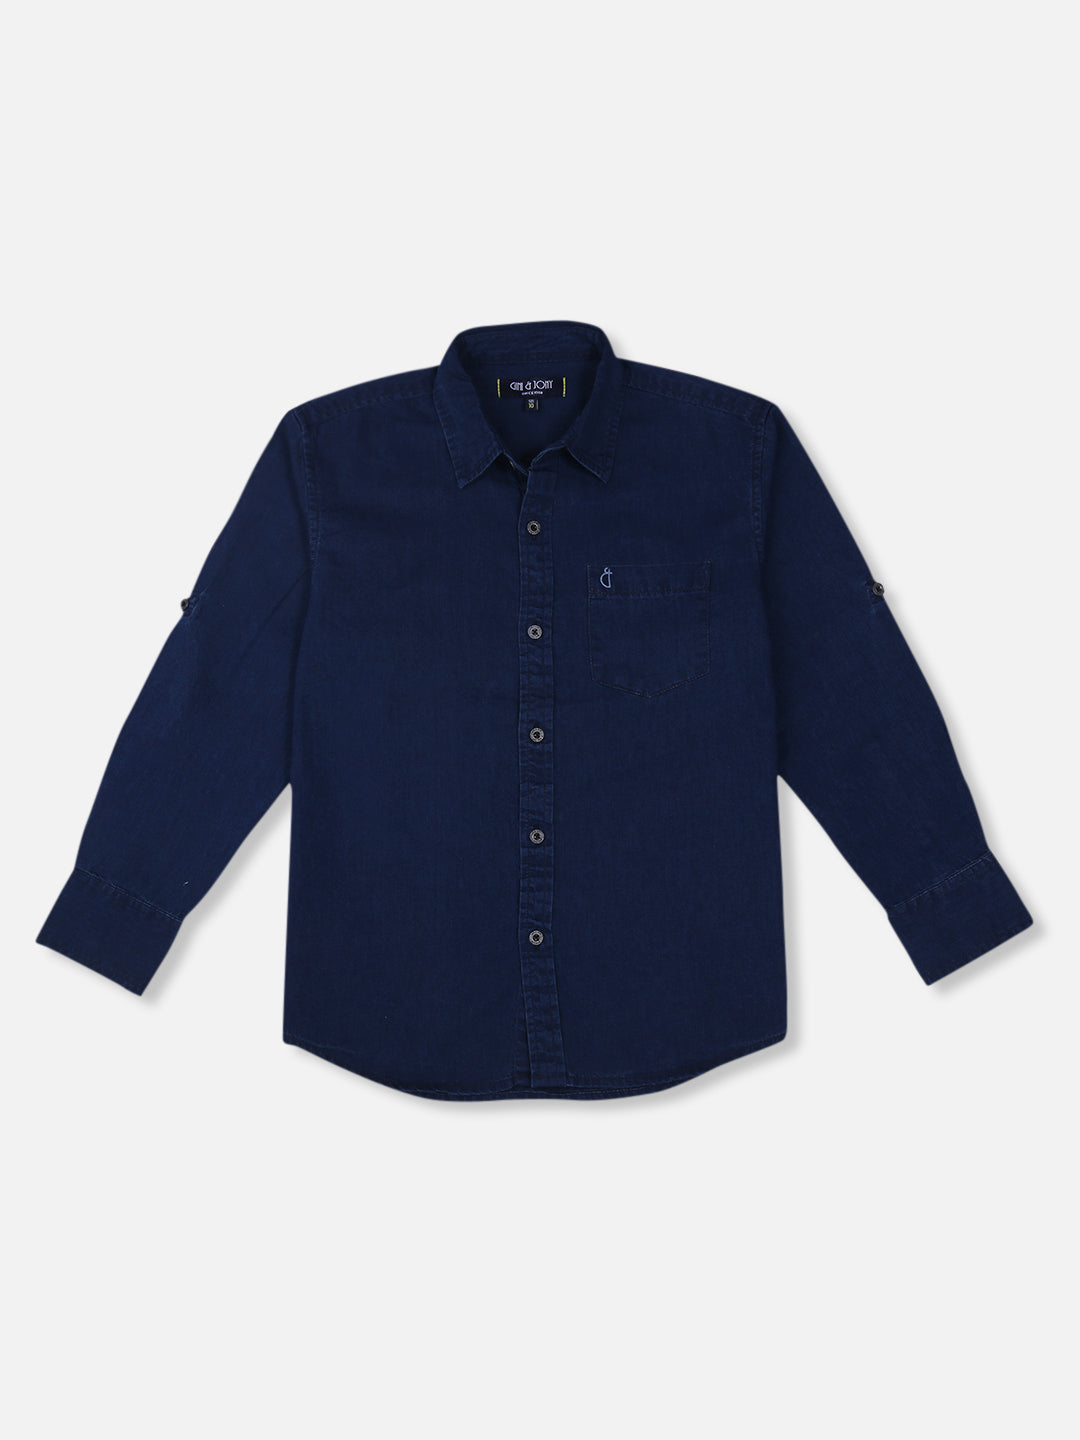 Boys Navy Blue Solid Cotton Shirt